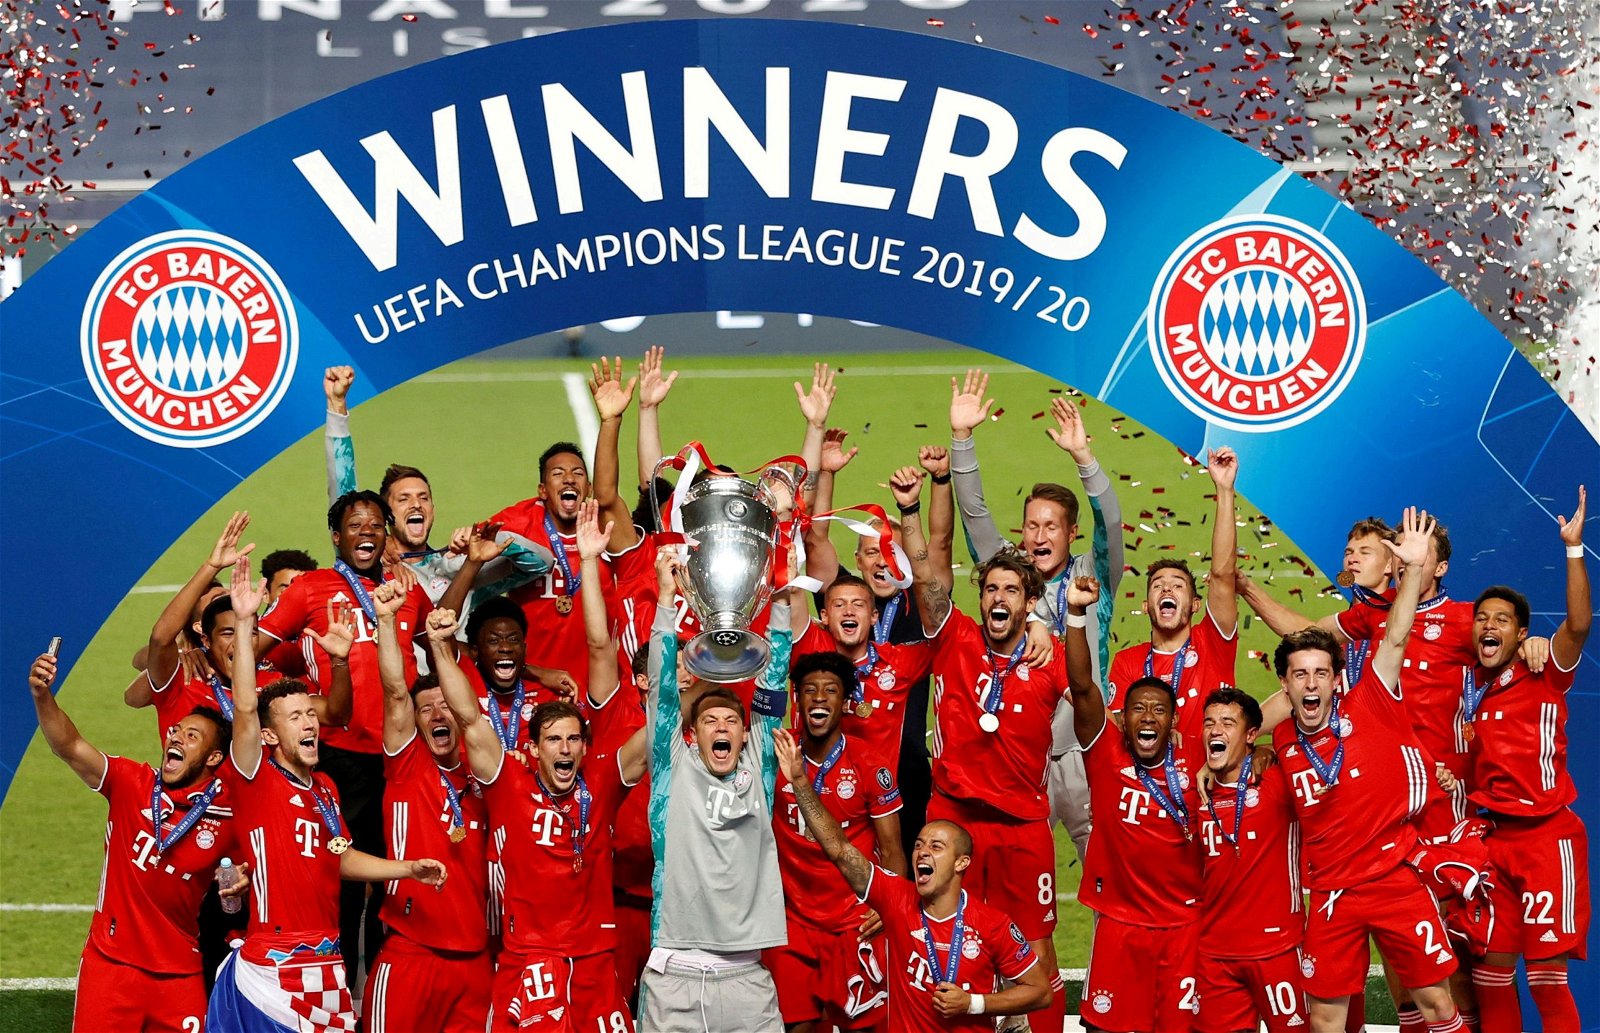 2019-20 UEFA Champions League winner